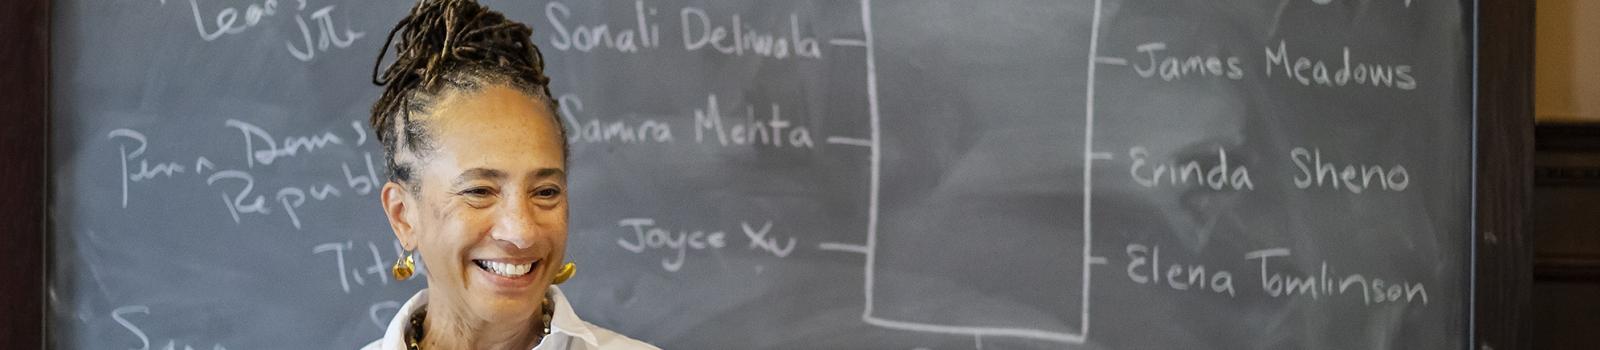 Professor smiling in front of a chalkboard